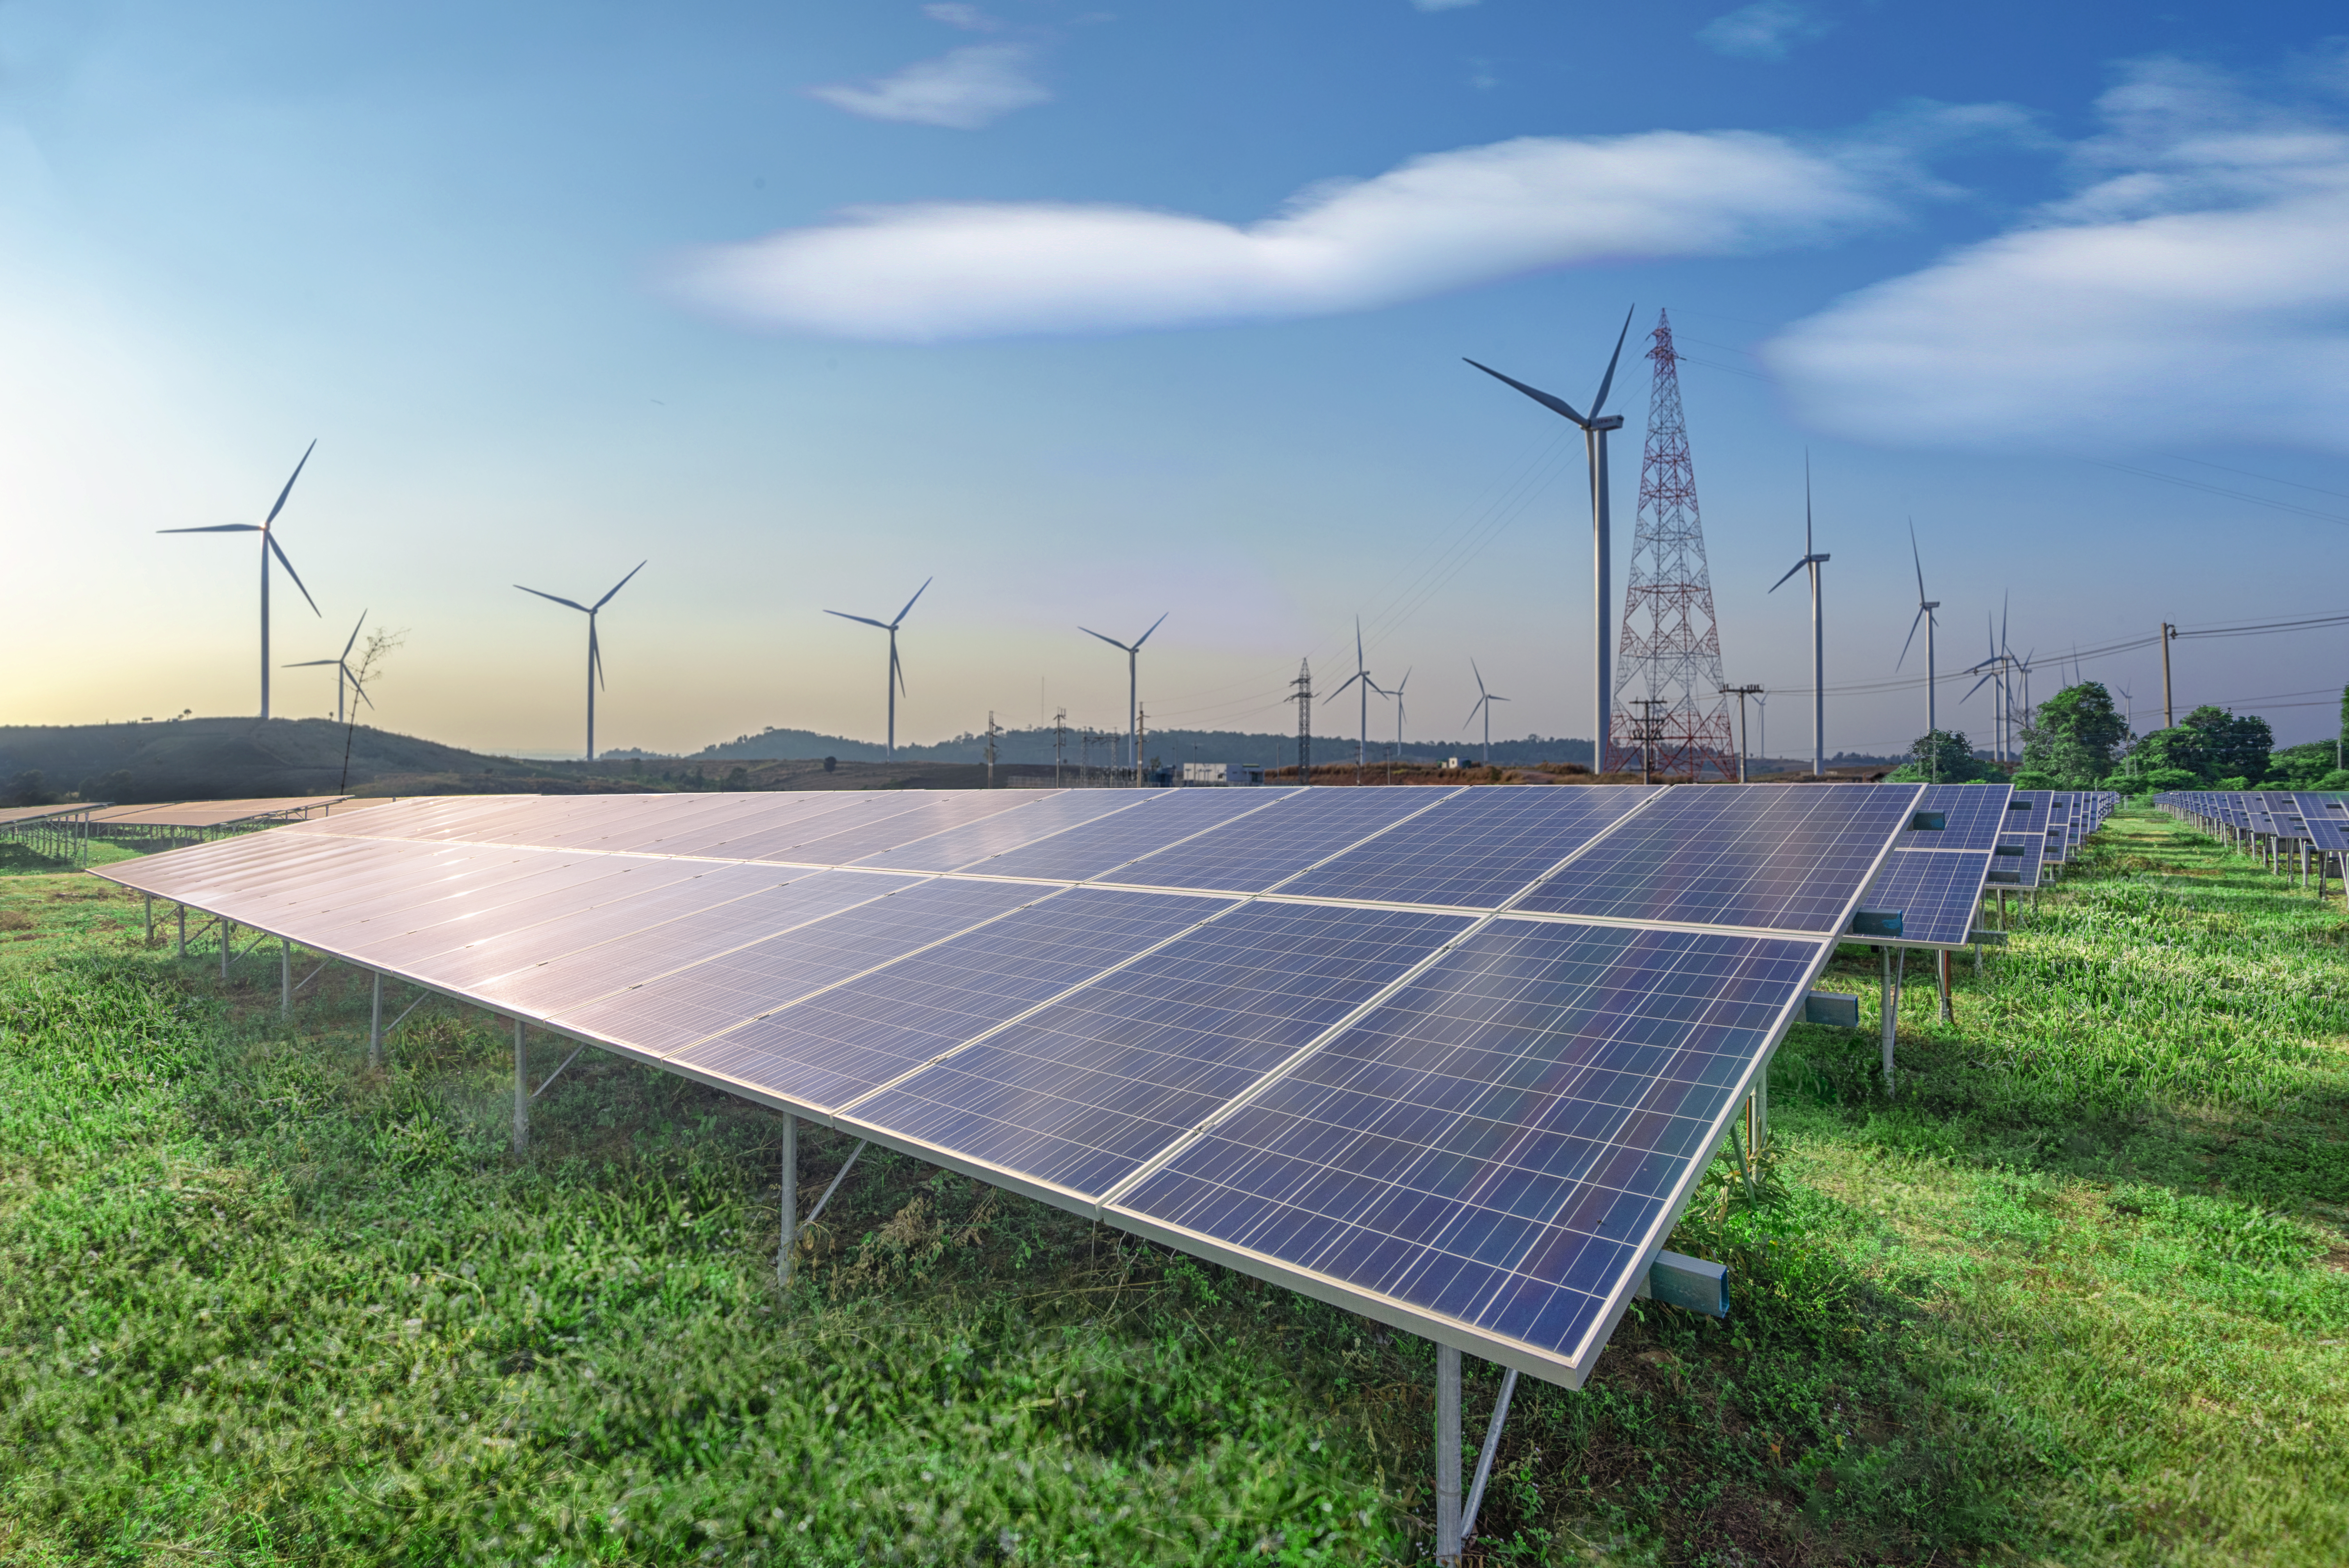 Renewable Energy Solar Panels Wind Turbines Green Grass Blue Sky